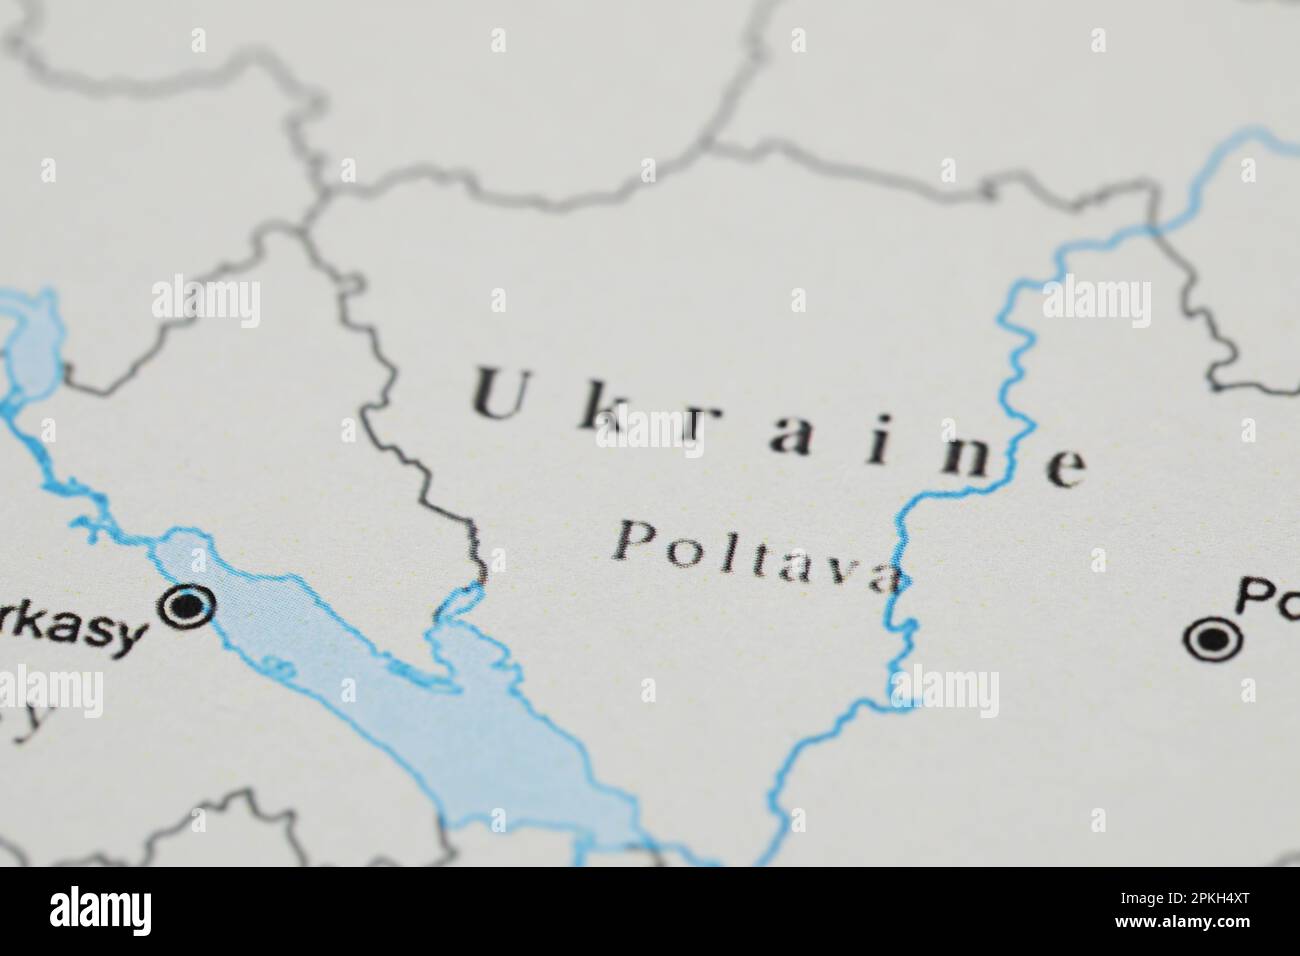 MYKOLAIV, UKRAINE - NOVEMBER 09, 2020: Poltava city marked on map of Ukraine, closeup Stock Photo